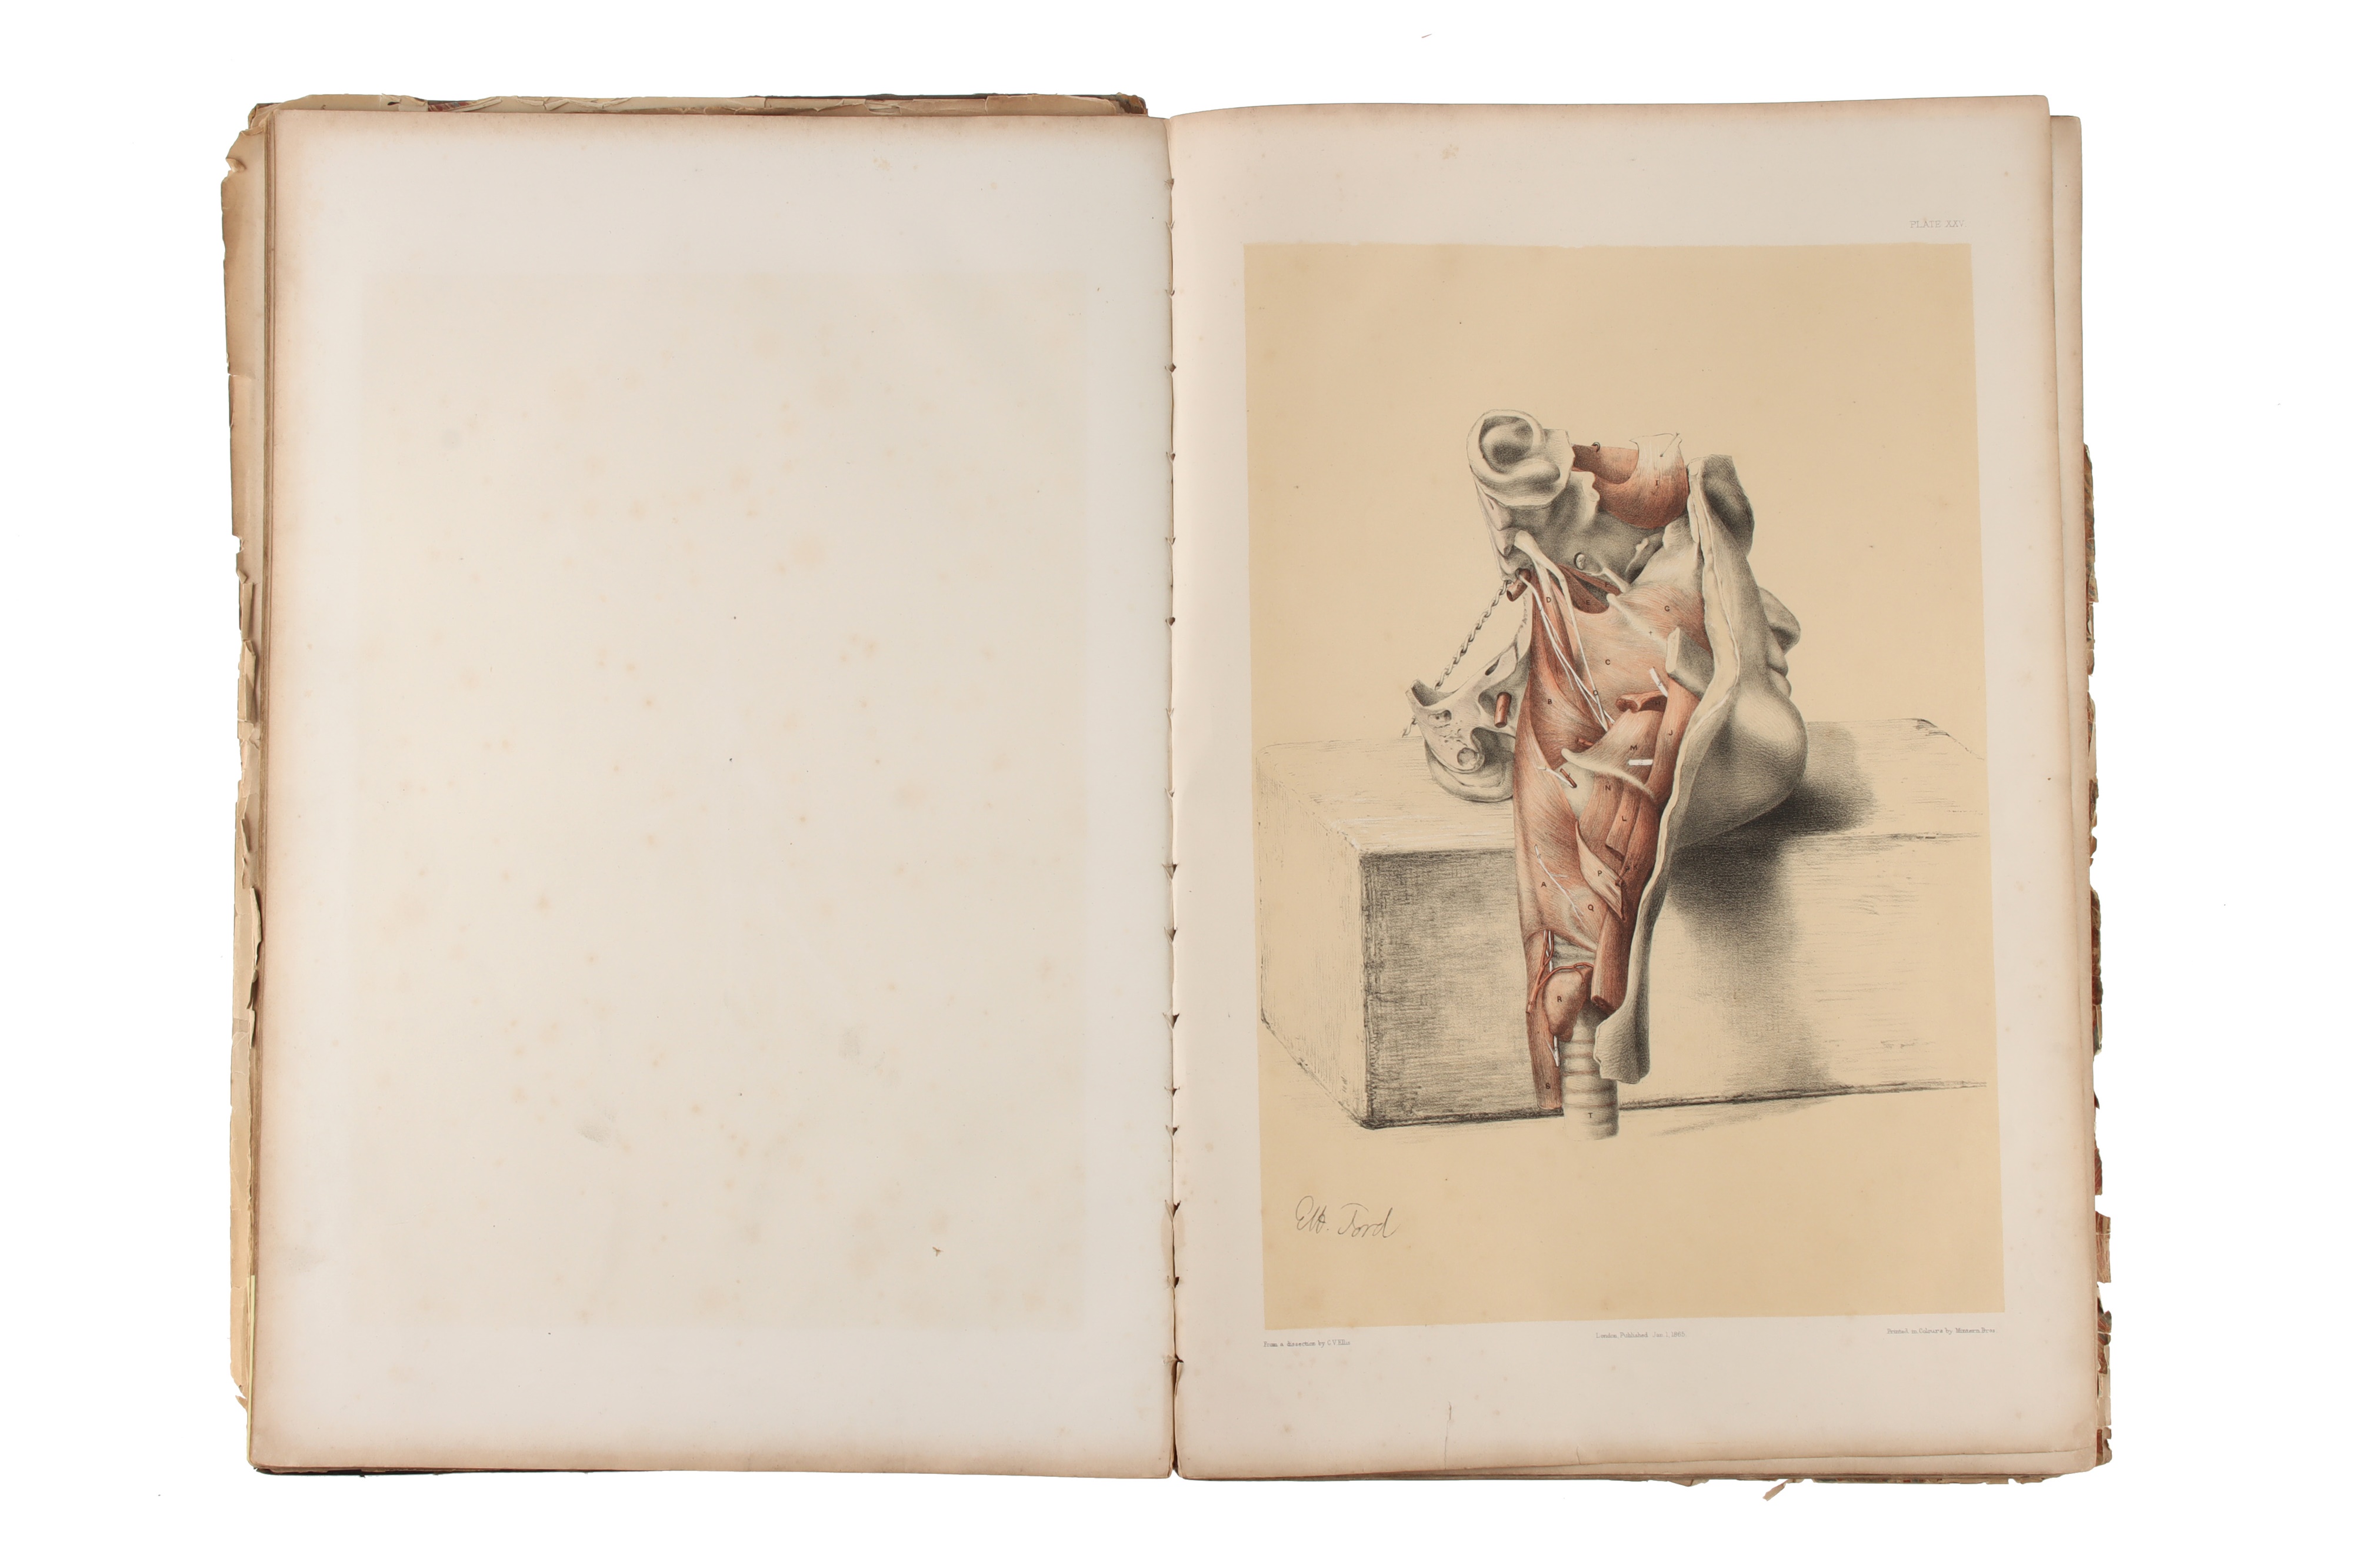 Ellis, George Viner, Illustrations of Dissections, 1867, - Image 3 of 6